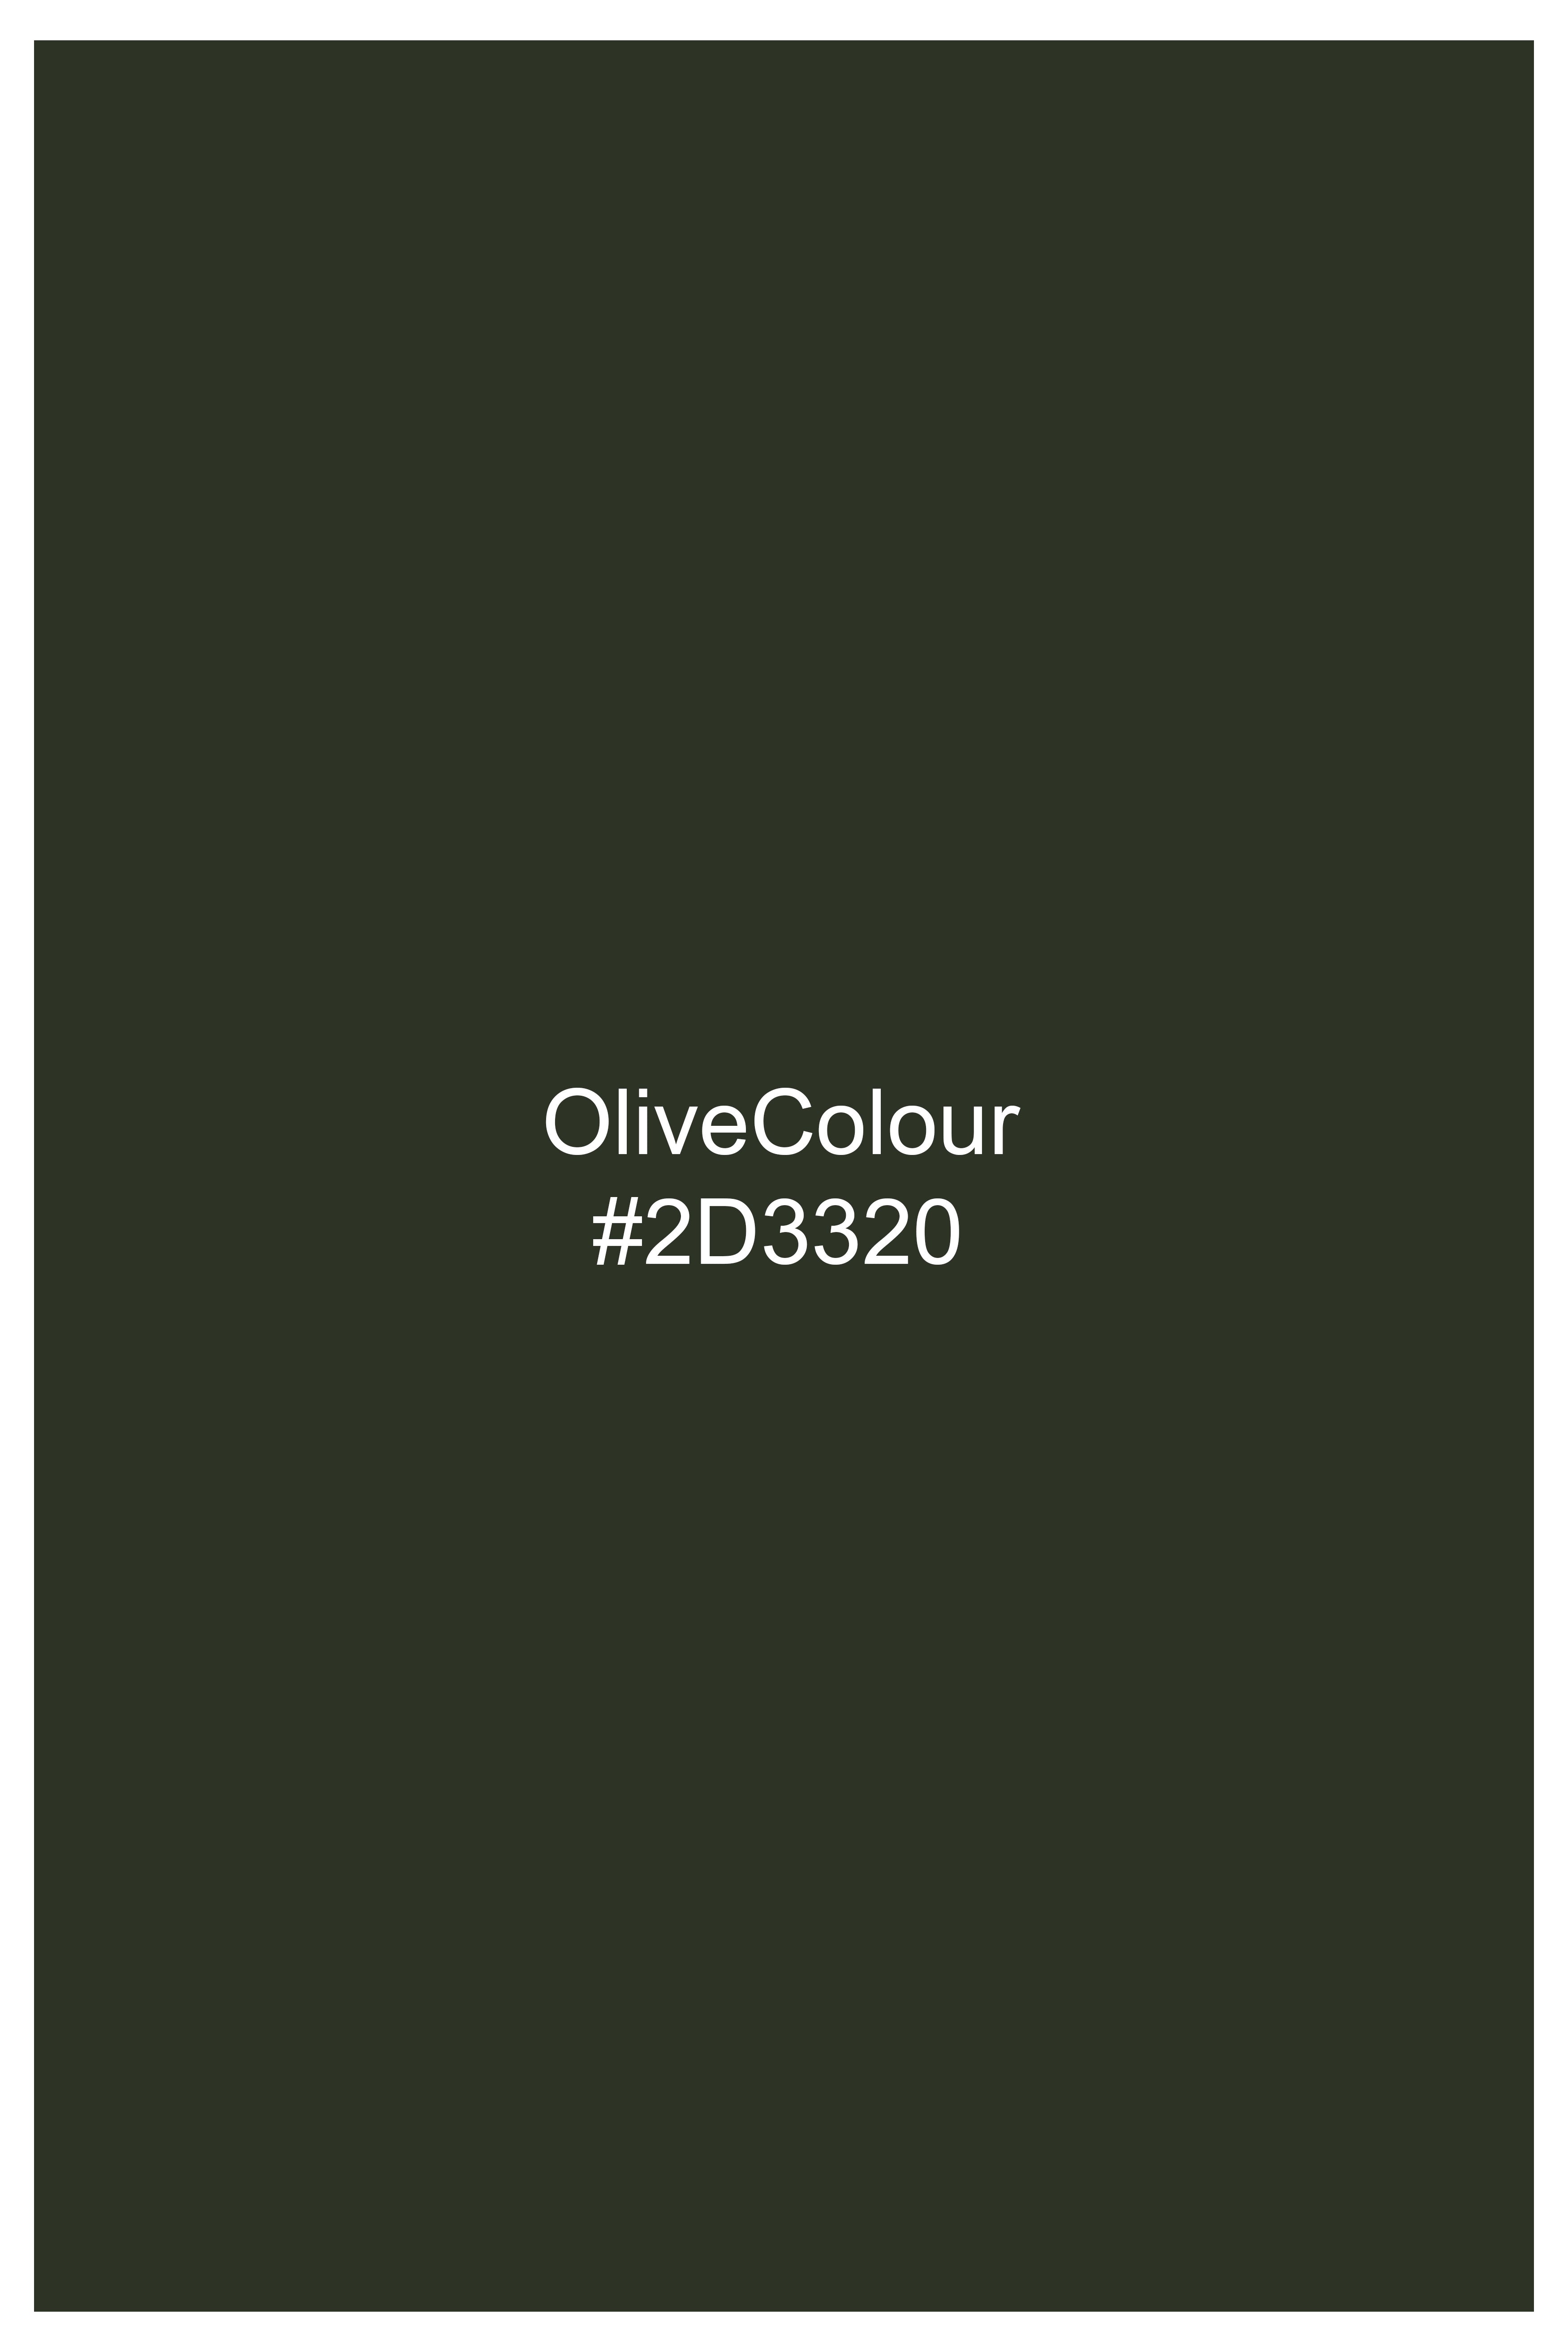 Olive Green Royal Oxford Button-Down Shirt 10461-BD-BLK-38, 10461-BD-BLK-H-38, 10461-BD-BLK-39, 10461-BD-BLK-H-39, 10461-BD-BLK-40, 10461-BD-BLK-H-40, 10461-BD-BLK-42, 10461-BD-BLK-H-42, 10461-BD-BLK-44, 10461-BD-BLK-H-44, 10461-BD-BLK-46, 10461-BD-BLK-H-46, 10461-BD-BLK-48, 10461-BD-BLK-H-48, 10461-BD-BLK-50, 10461-BD-BLK-H-50, 10461-BD-BLK-52, 10461-BD-BLK-H-52